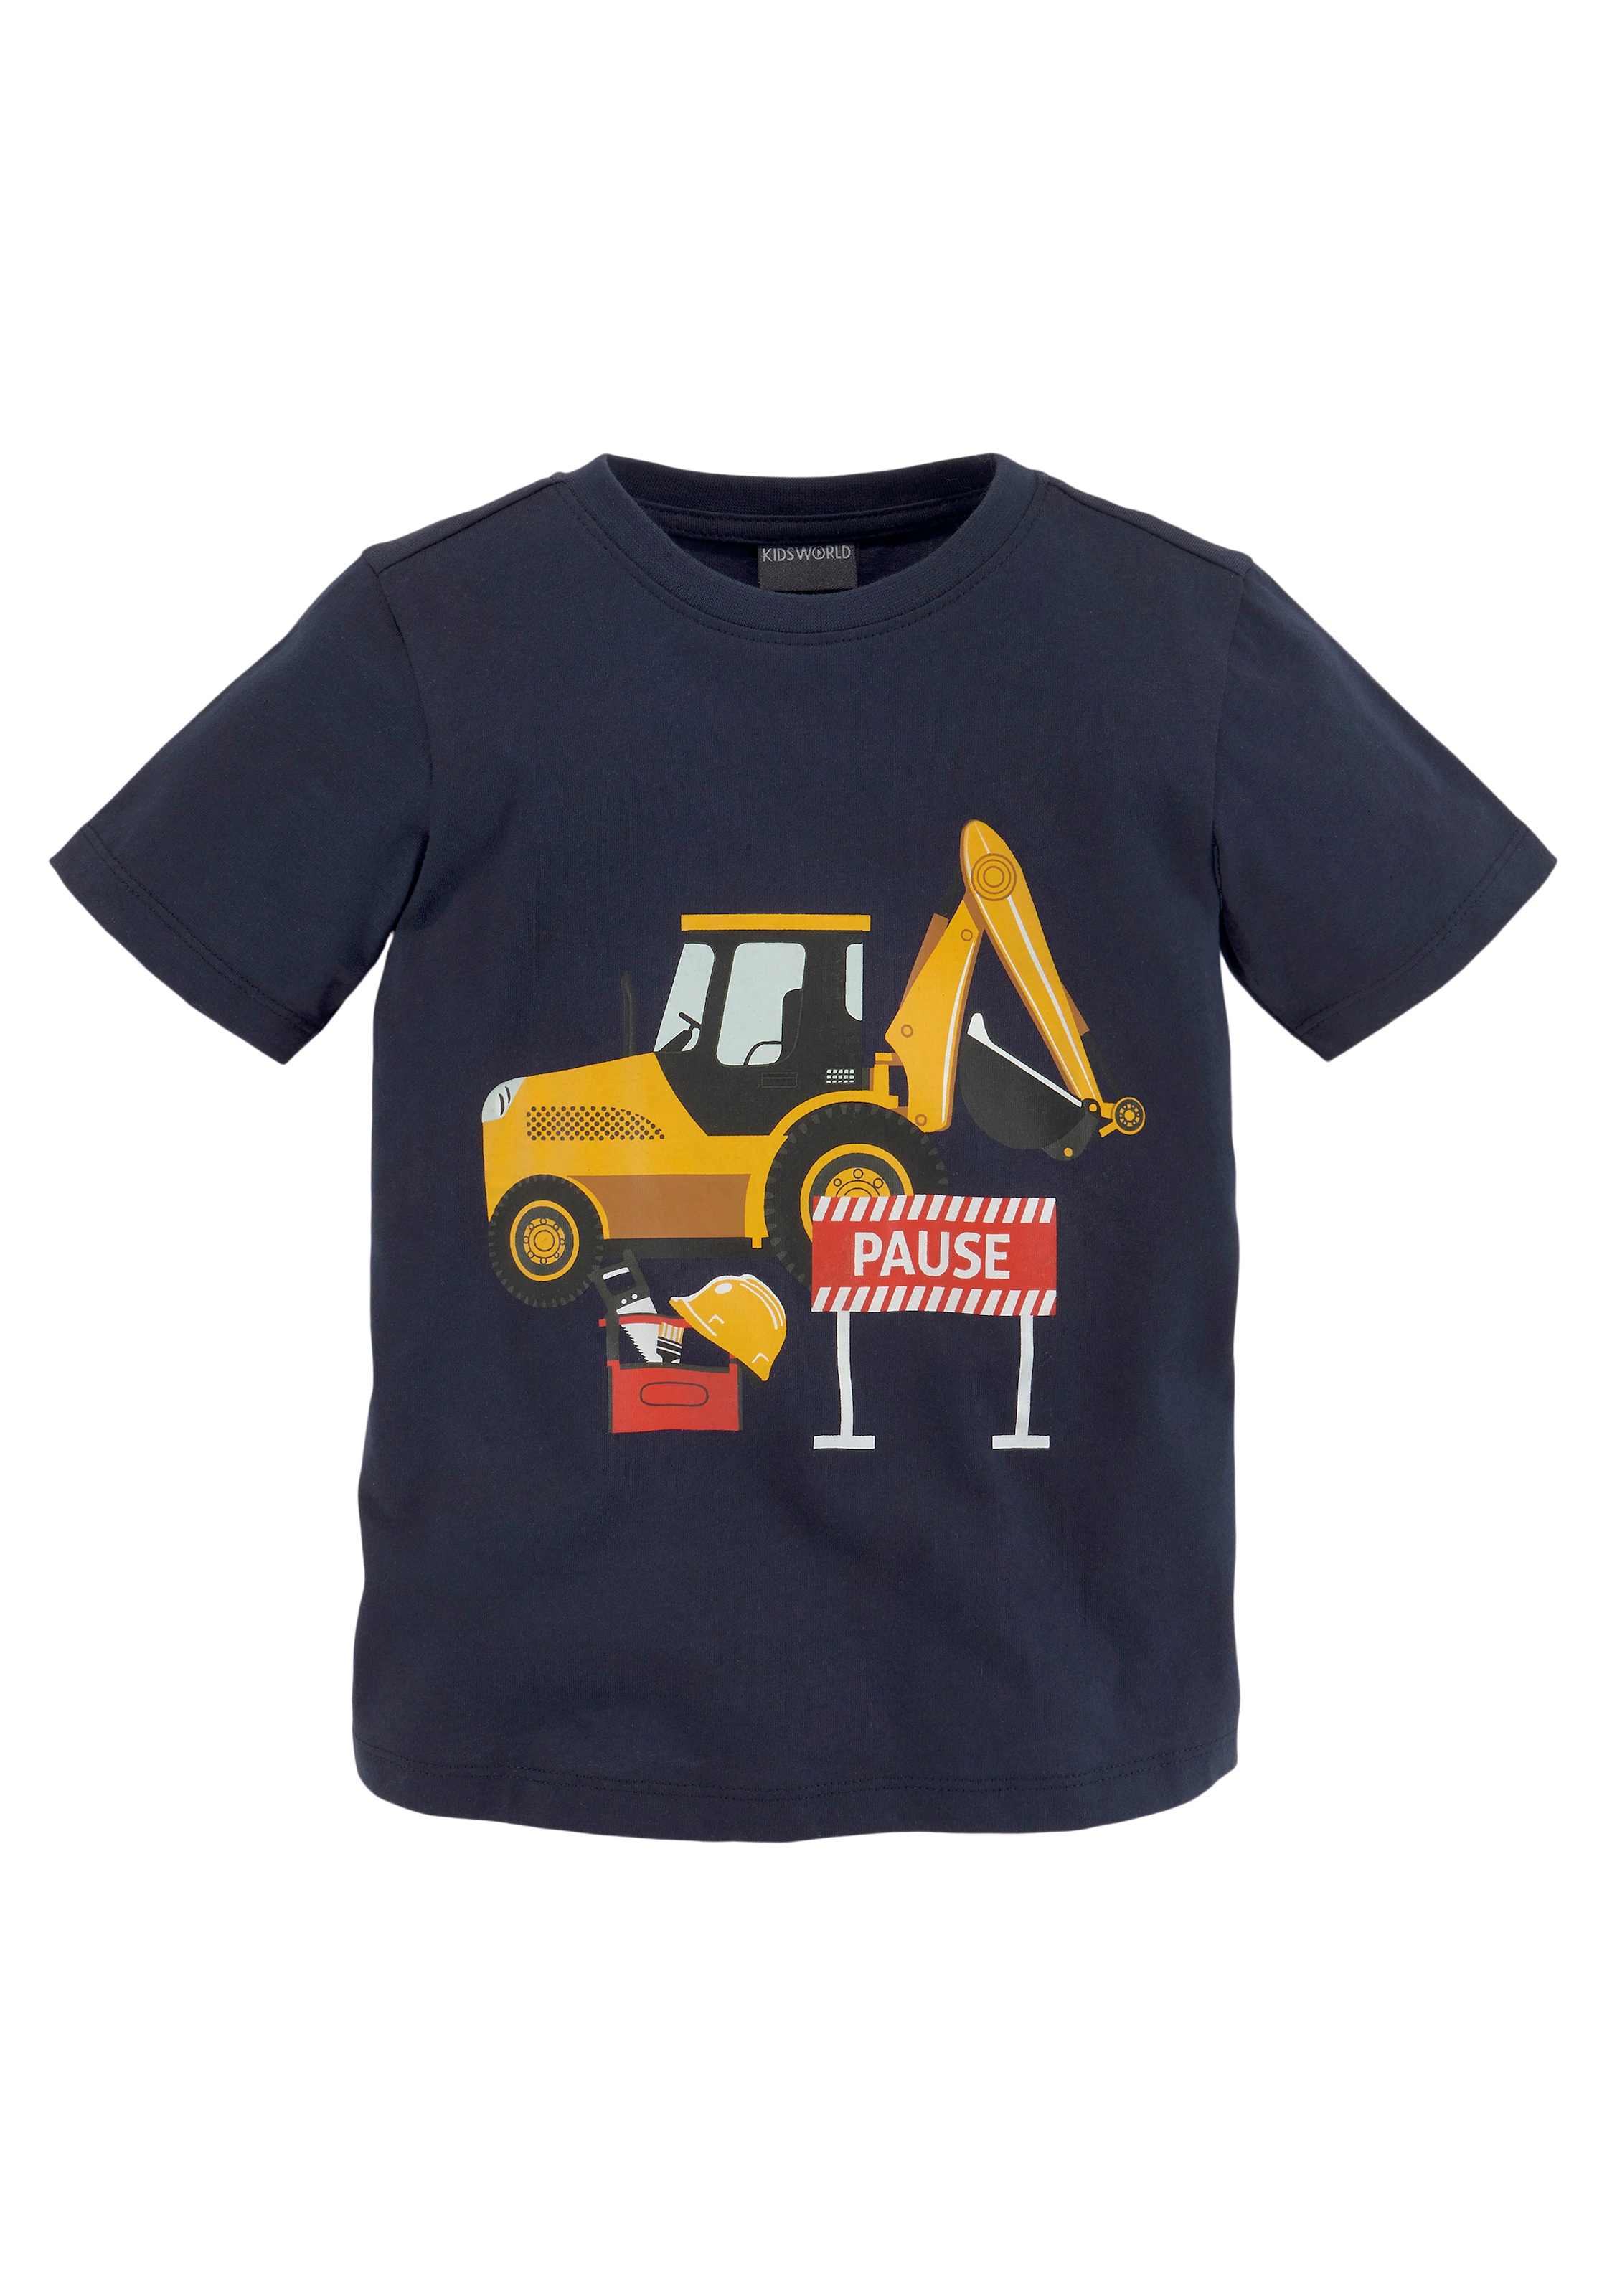 KIDSWORLD T-Shirt »BEST JOB EVER!«, (Packung, 2er-Pack)